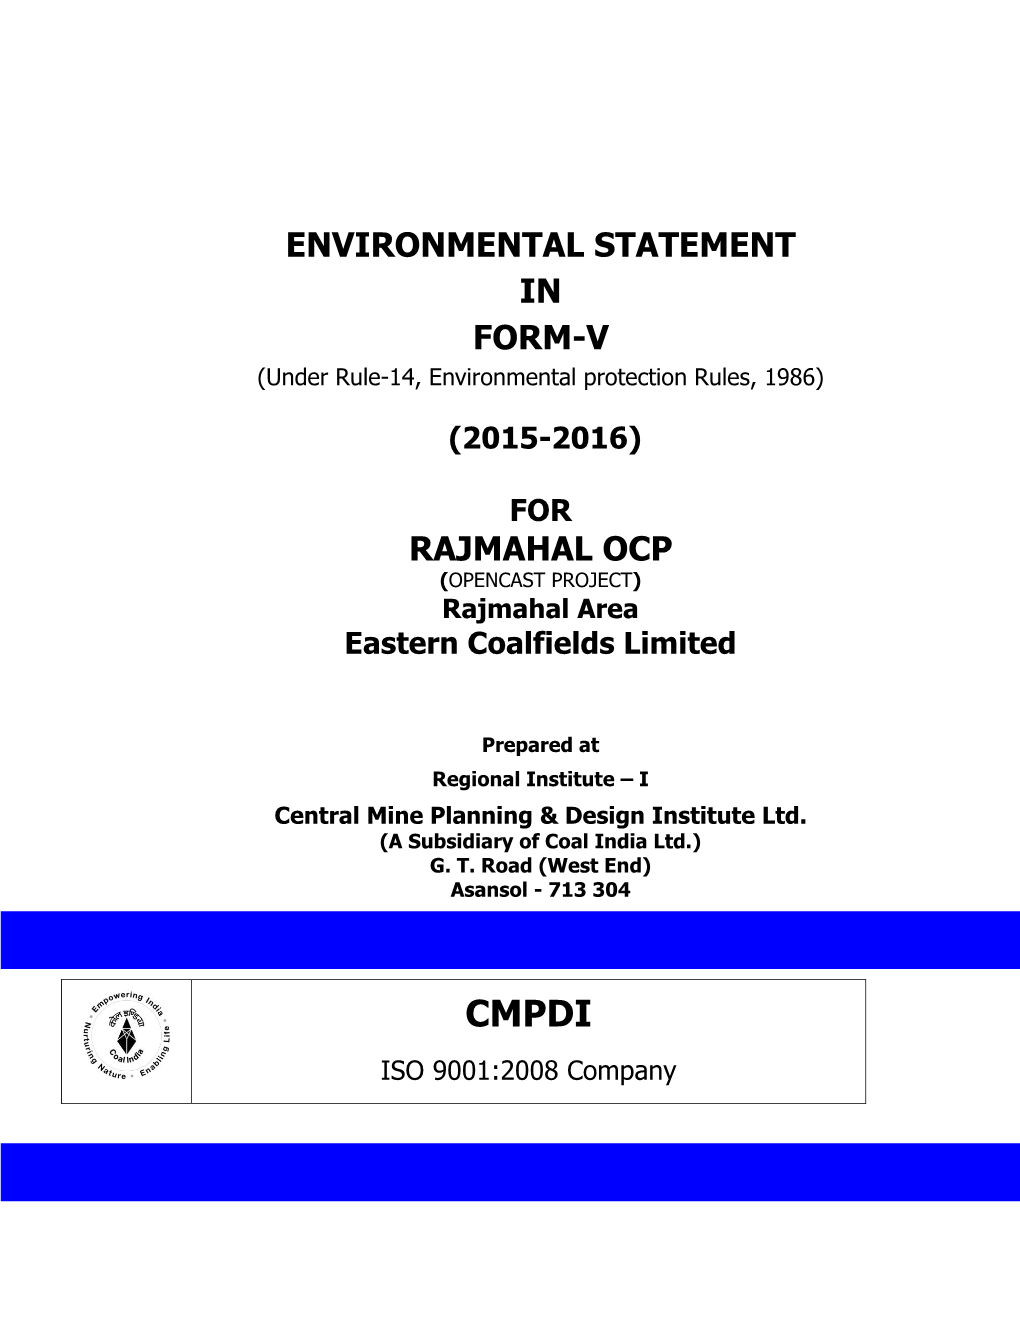 Environmental Statement in Form-V Rajmahal